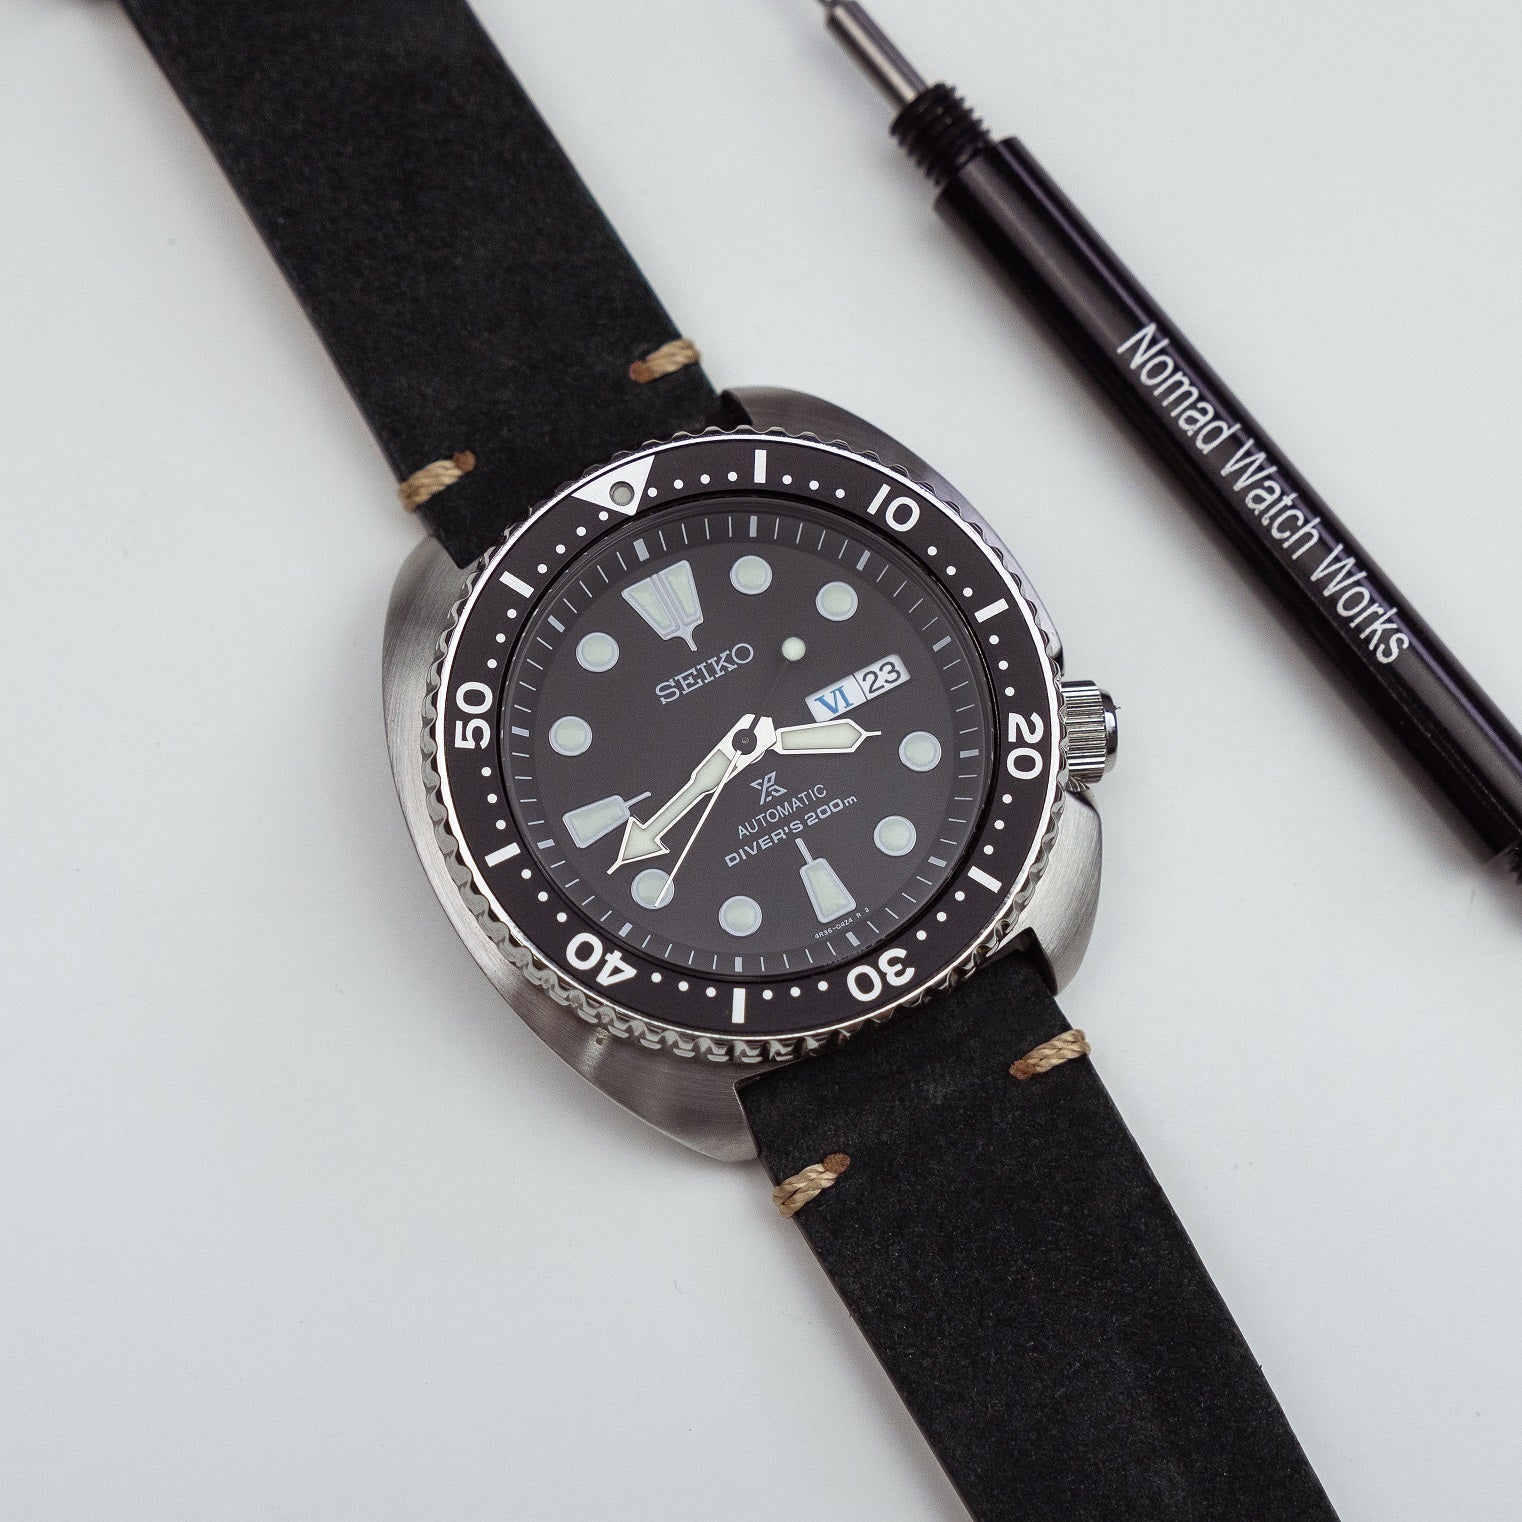 Premium Vintage Suede Leather Watch Strap in Black (18mm) - Nomad Watch Works MY